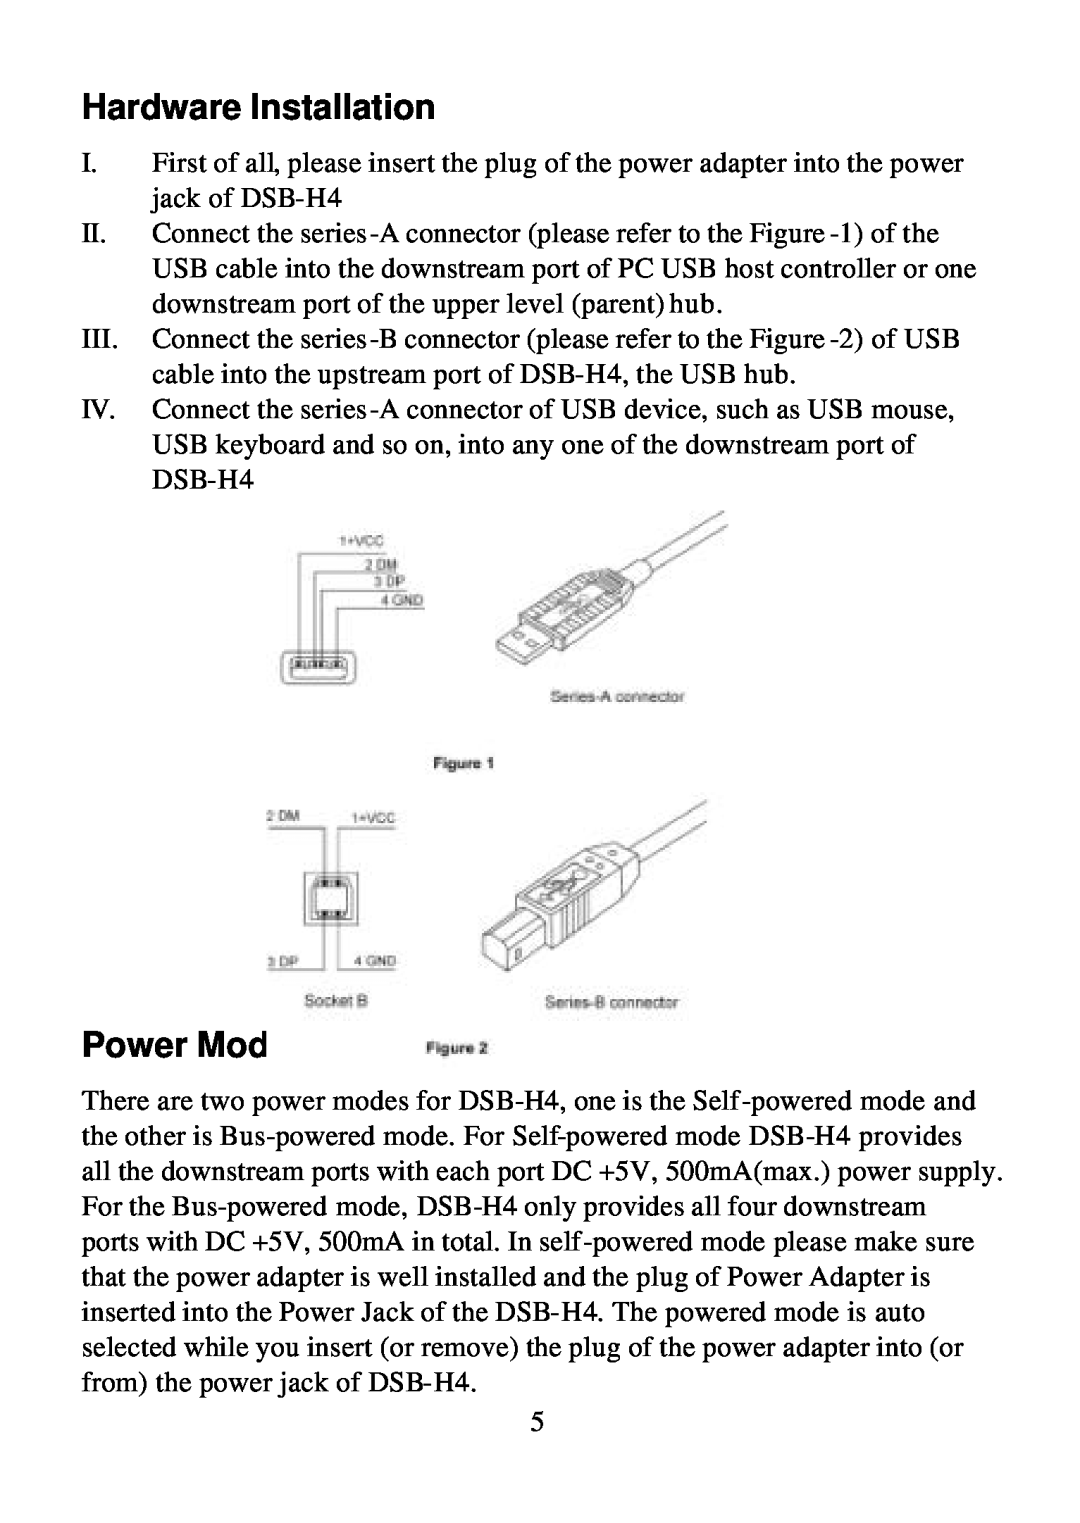 D-Link DSB-H4 user manual Hardware Installation, Power Mode Setting 